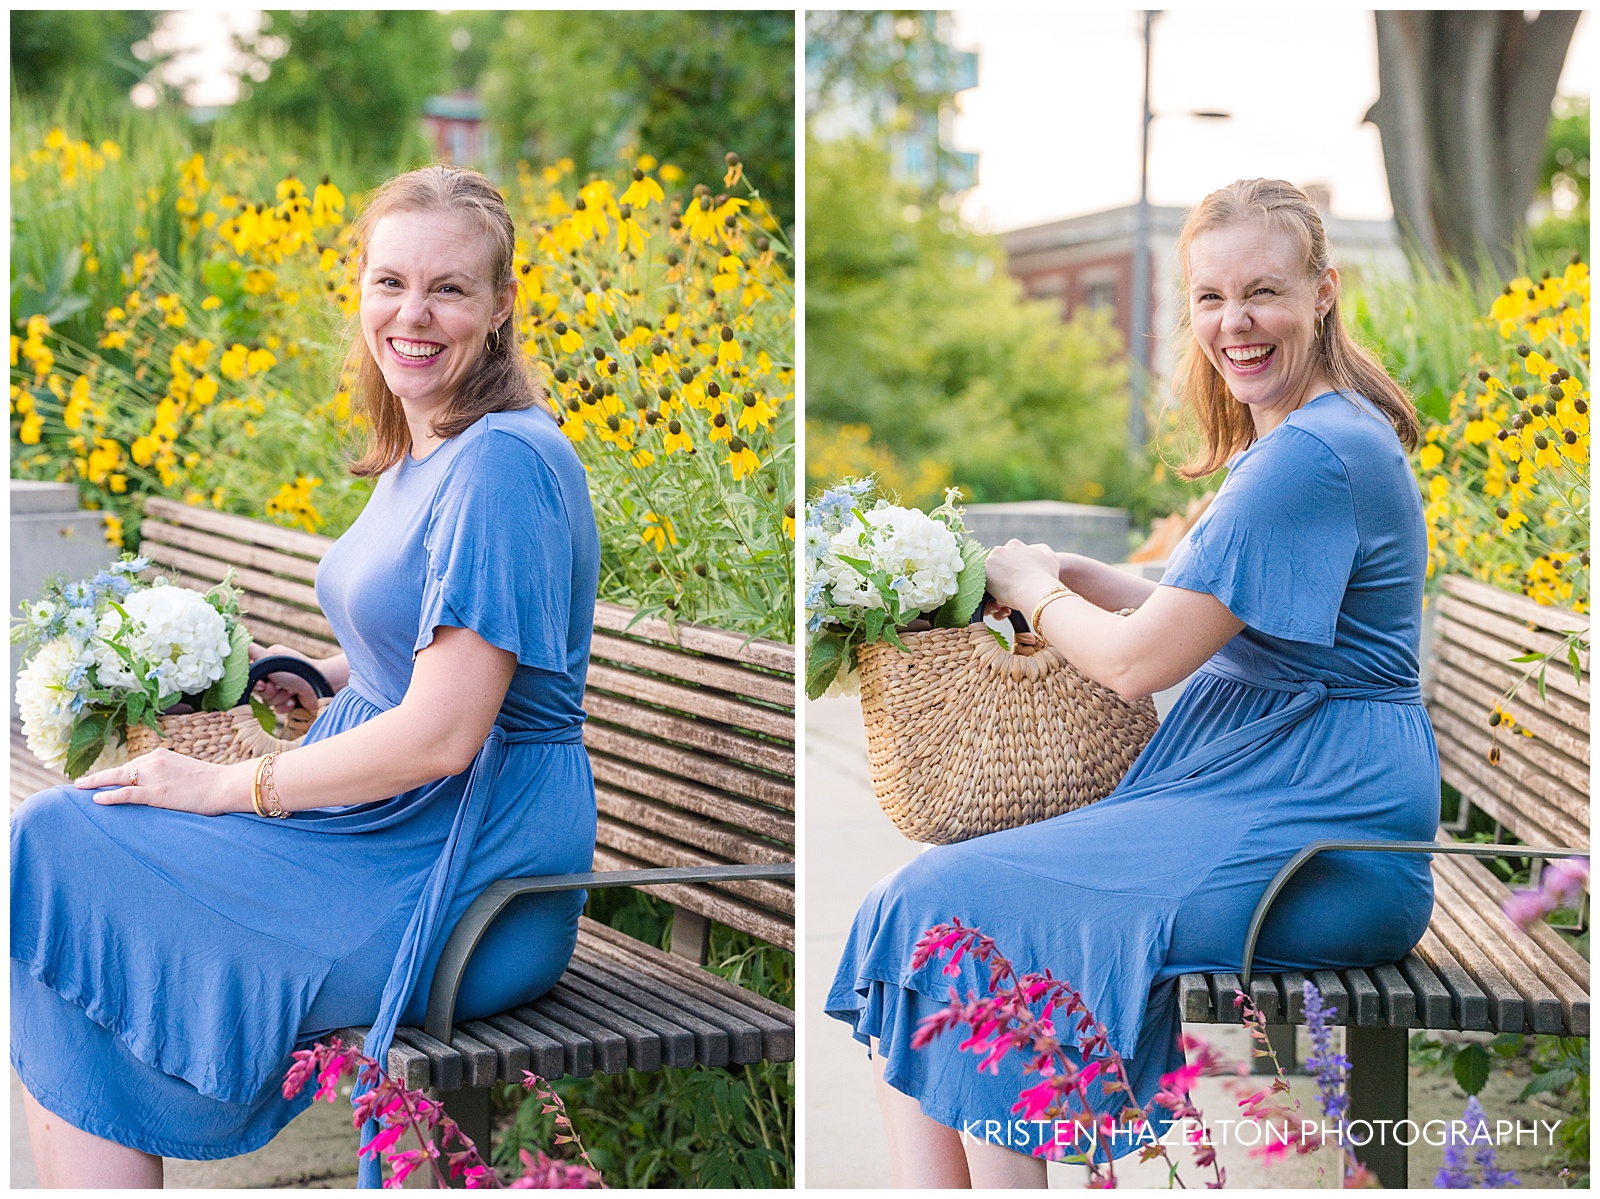 Photographer Kristen Hazelton in a blue dress seated on a park bench in Oak Park, IL